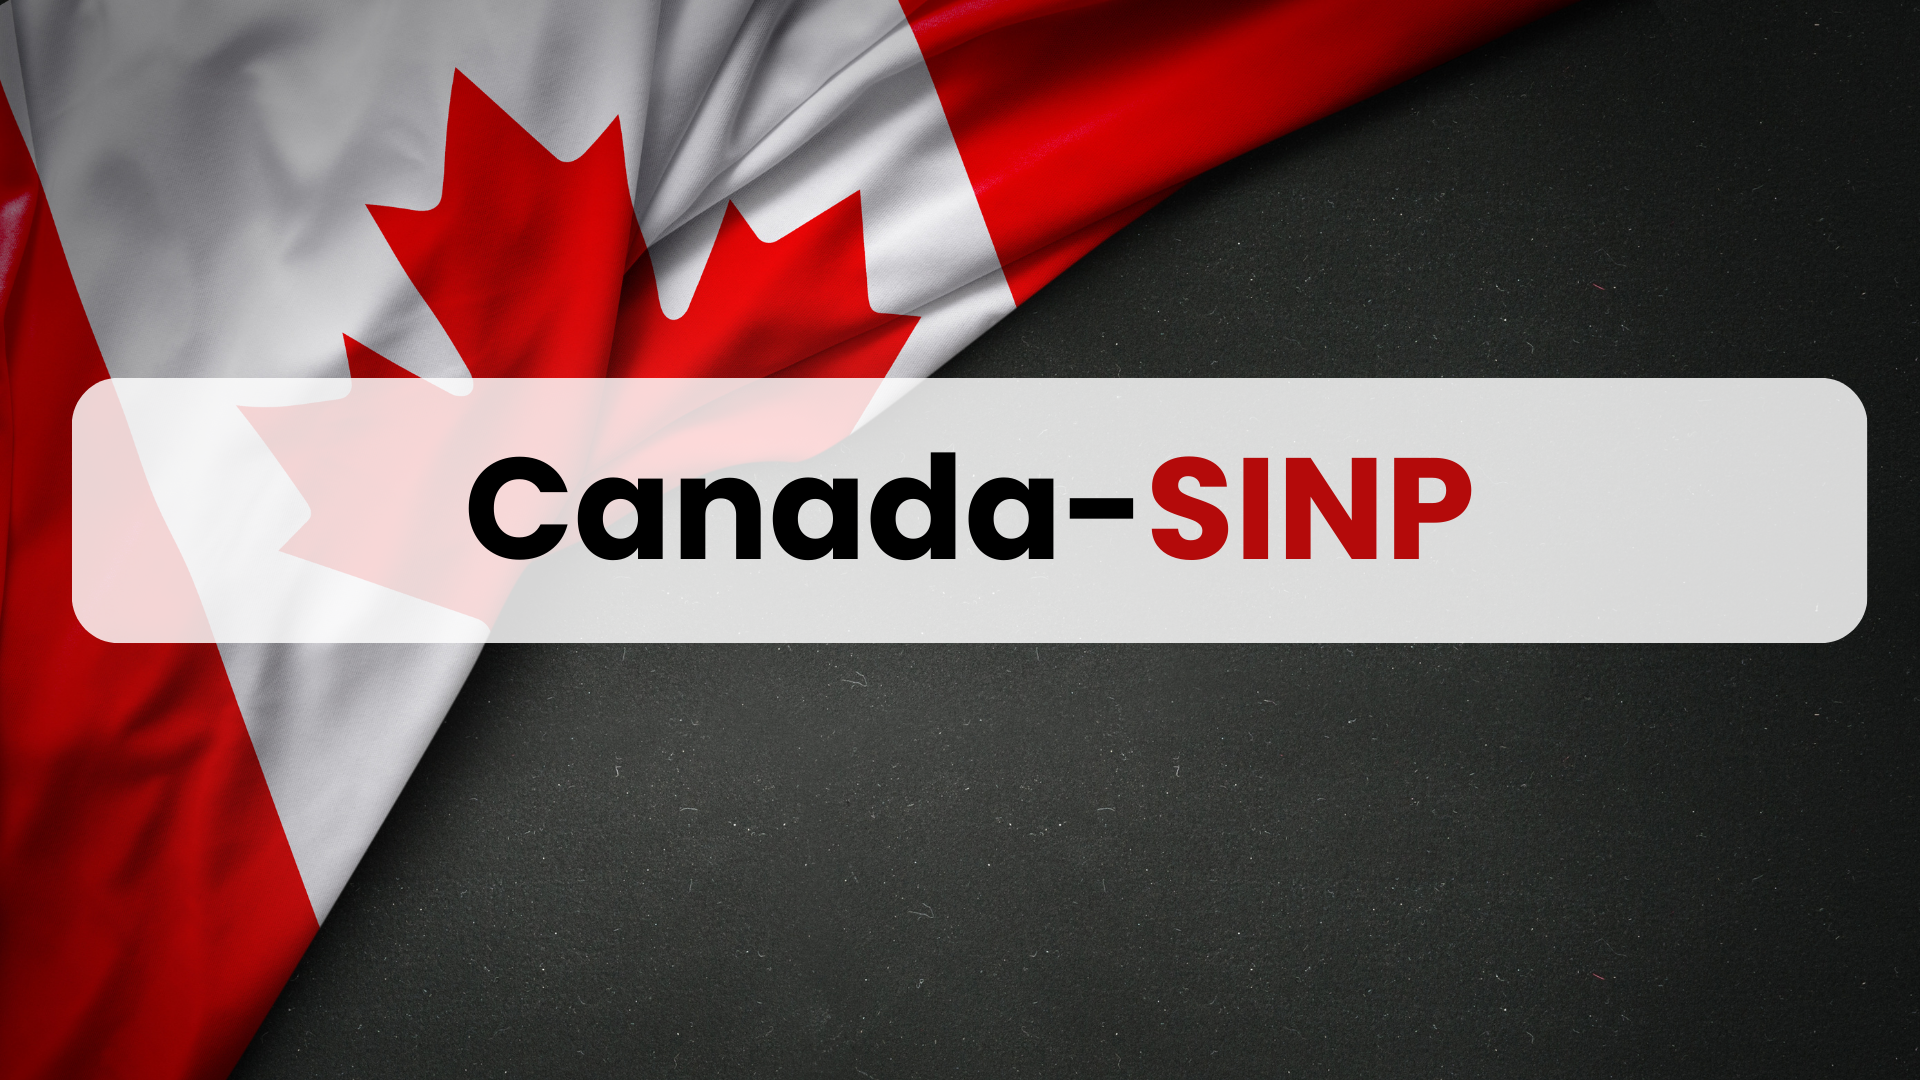 Canada-SINP (Saskatchewan Immigrant Nominee Program)